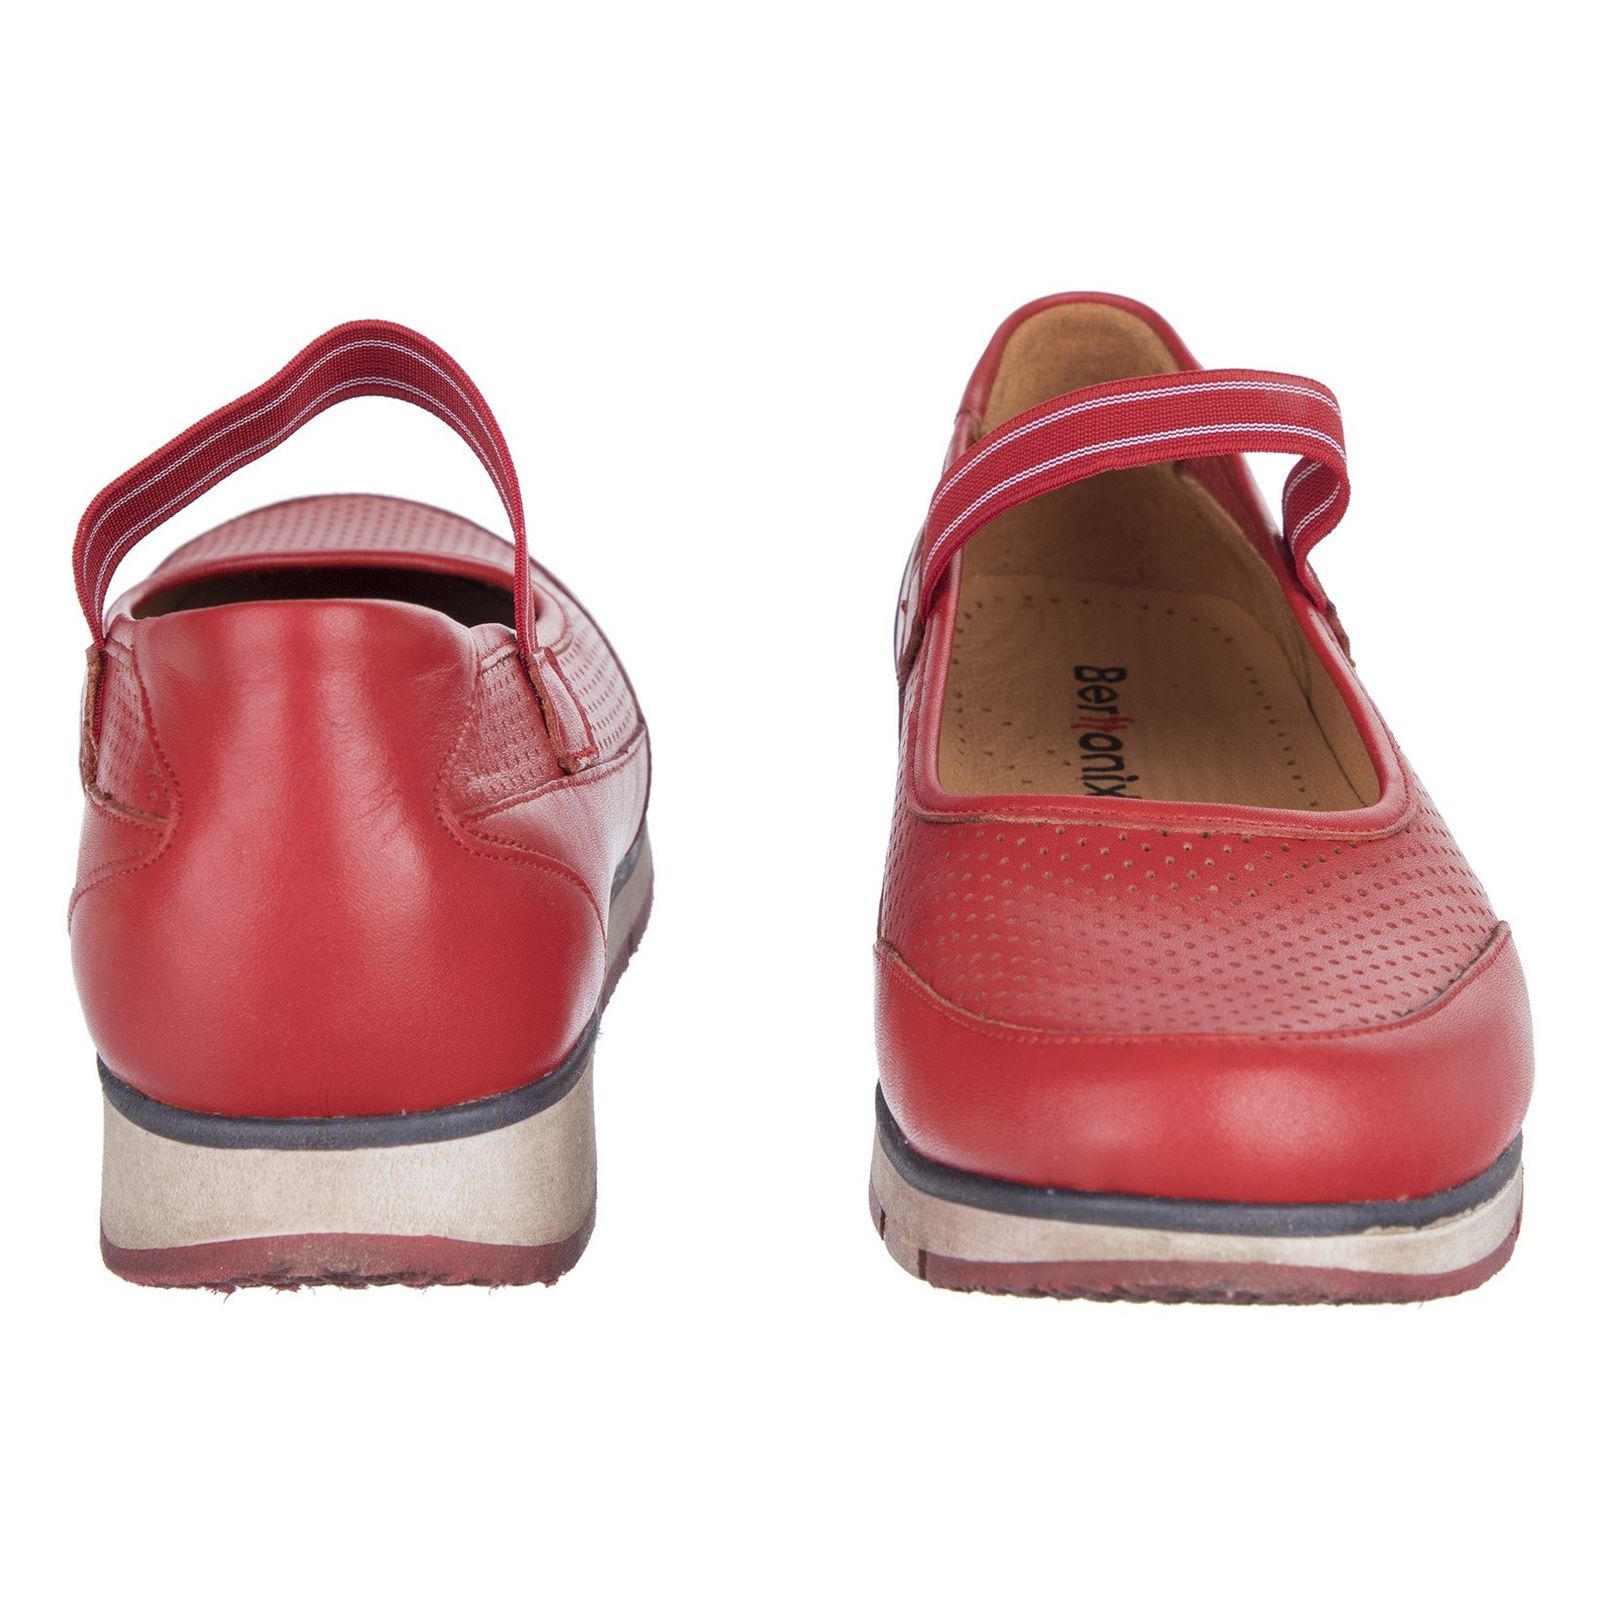 کفش تخت چرم زنانه - برتونیکس - قرمز - 6